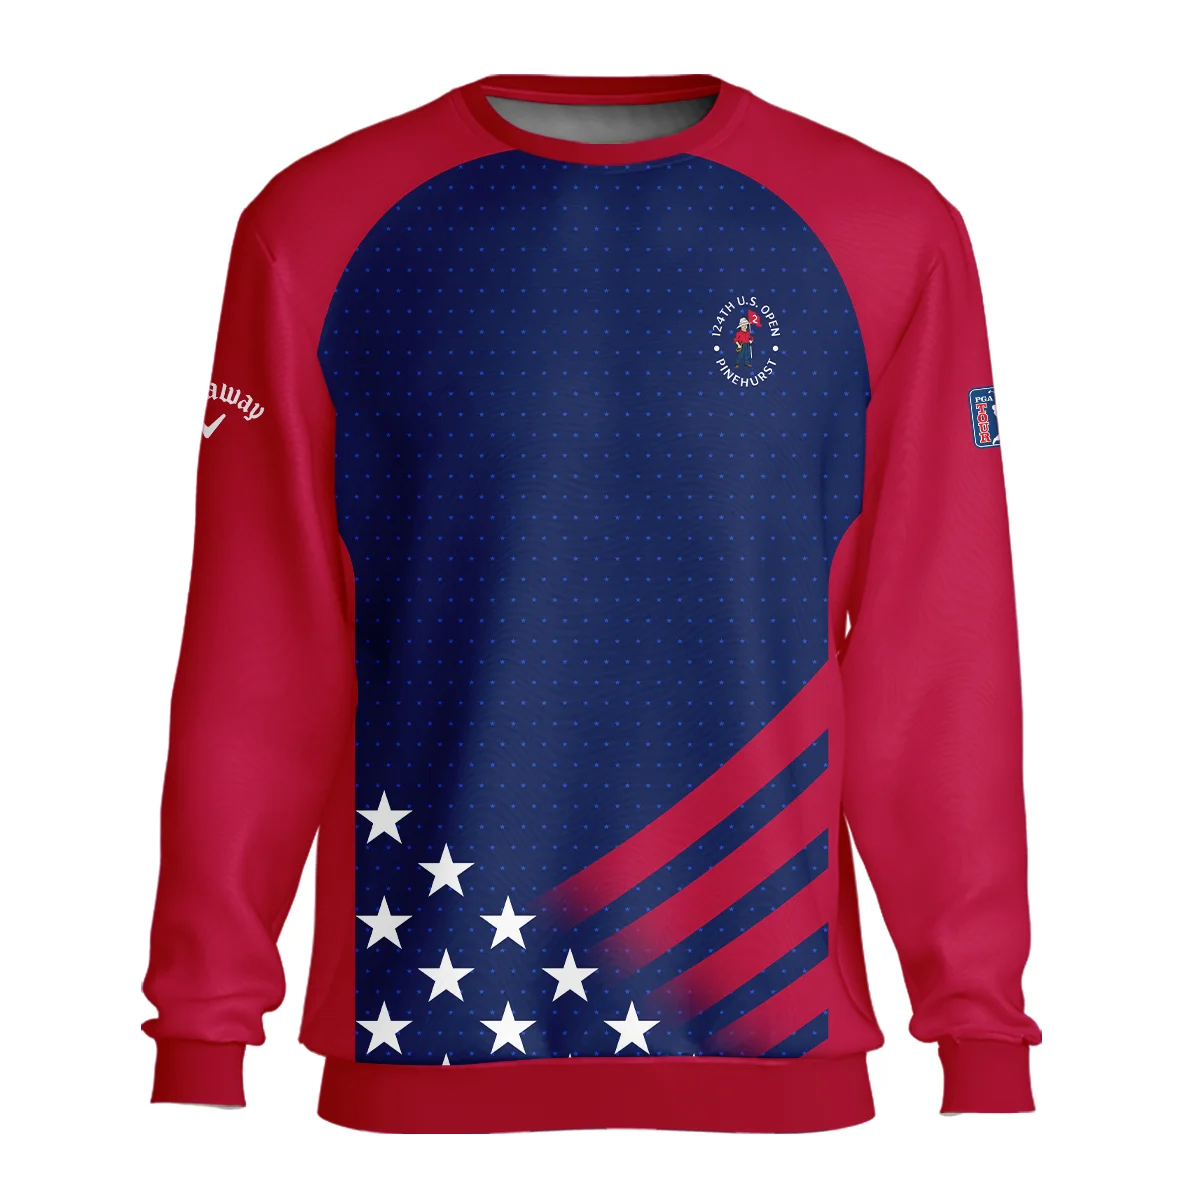 Callaway 124th U.S. Open Pinehurst Star White Dark Blue Red Background Unisex Sweatshirt Style Classic Sweatshirt